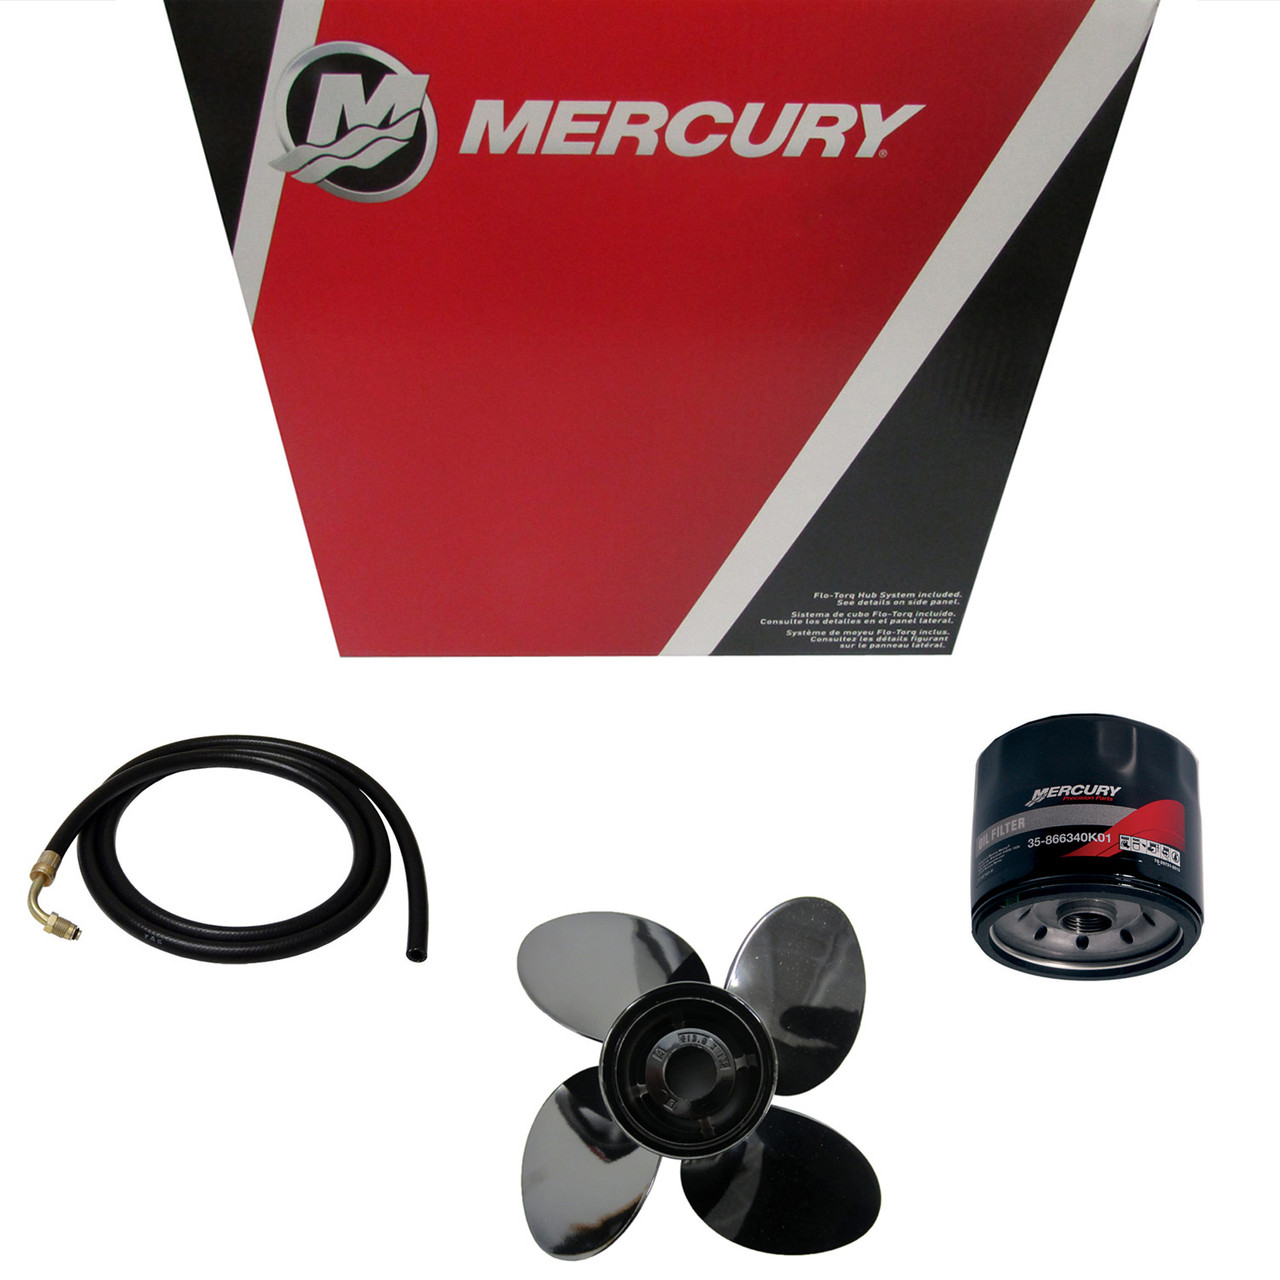 Mercury Marine/Mercruiser  New OEM DECAL SET 37-896853A06